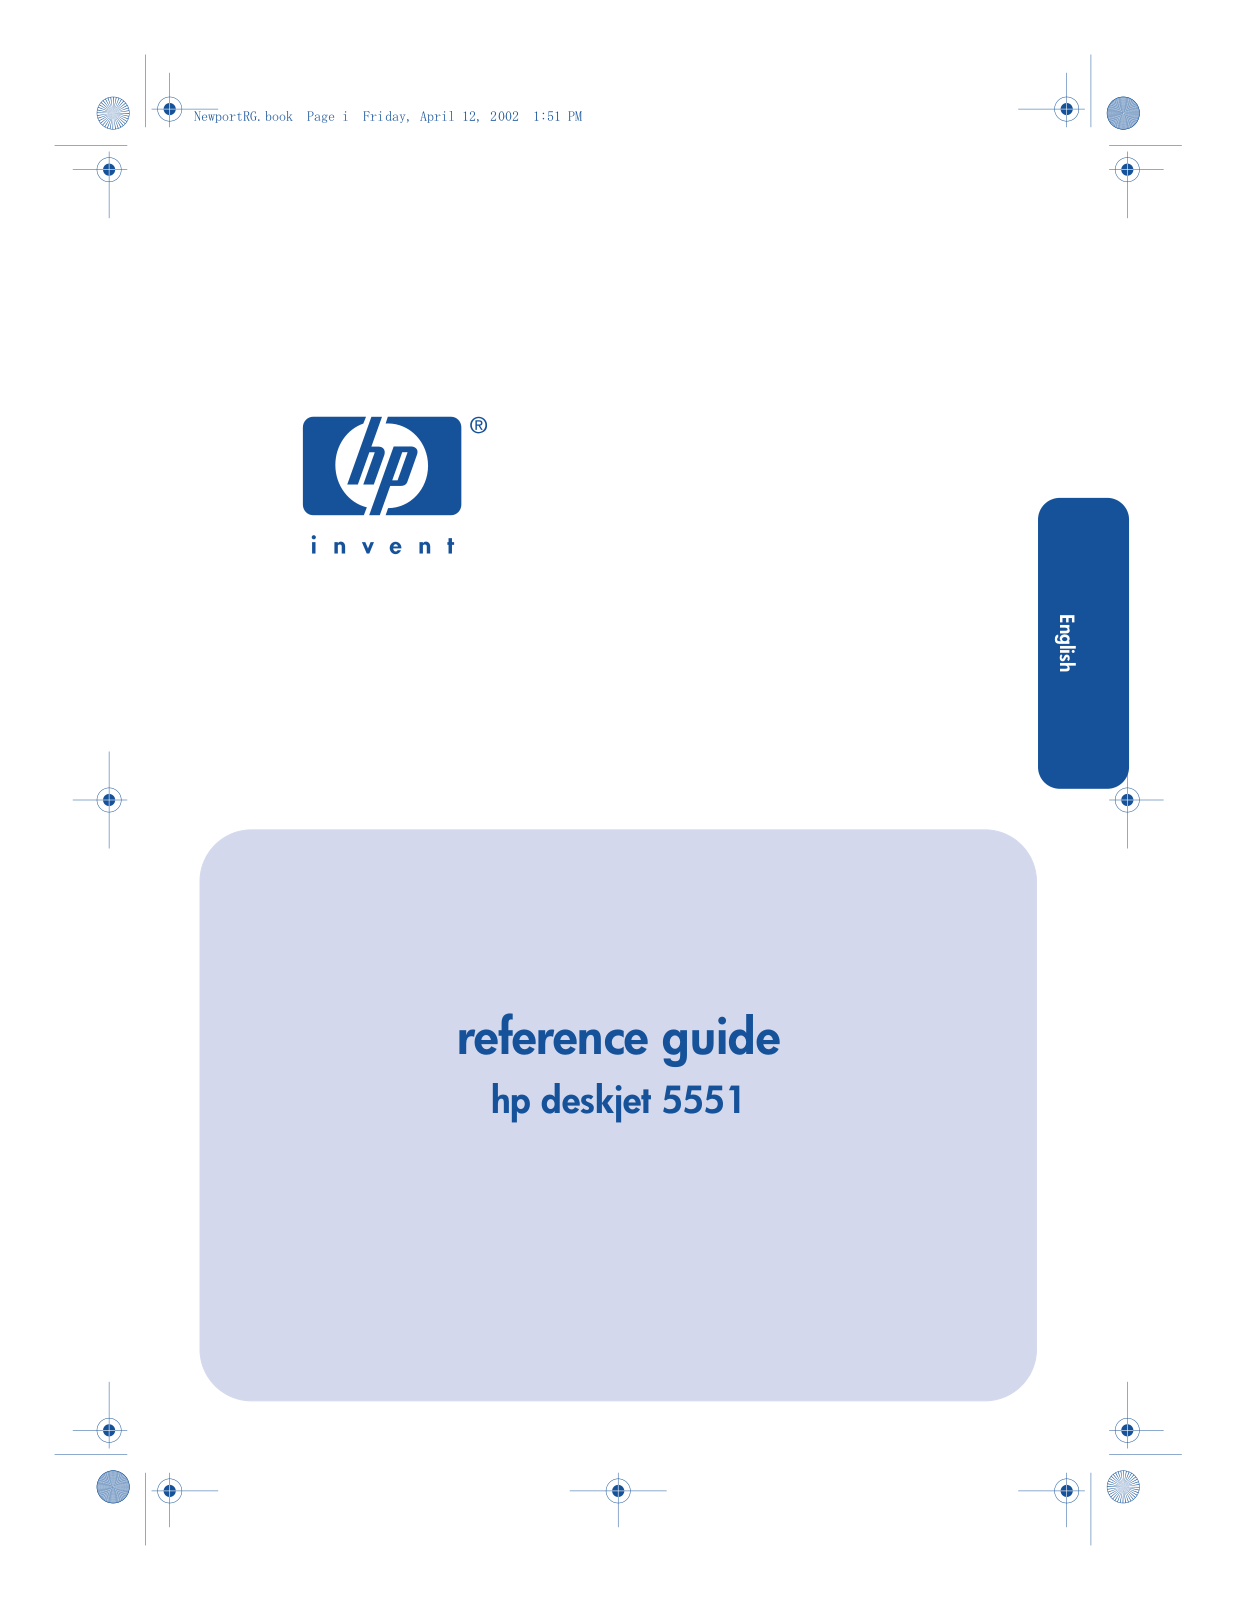 HP DeskJet 5551 Reference Guide